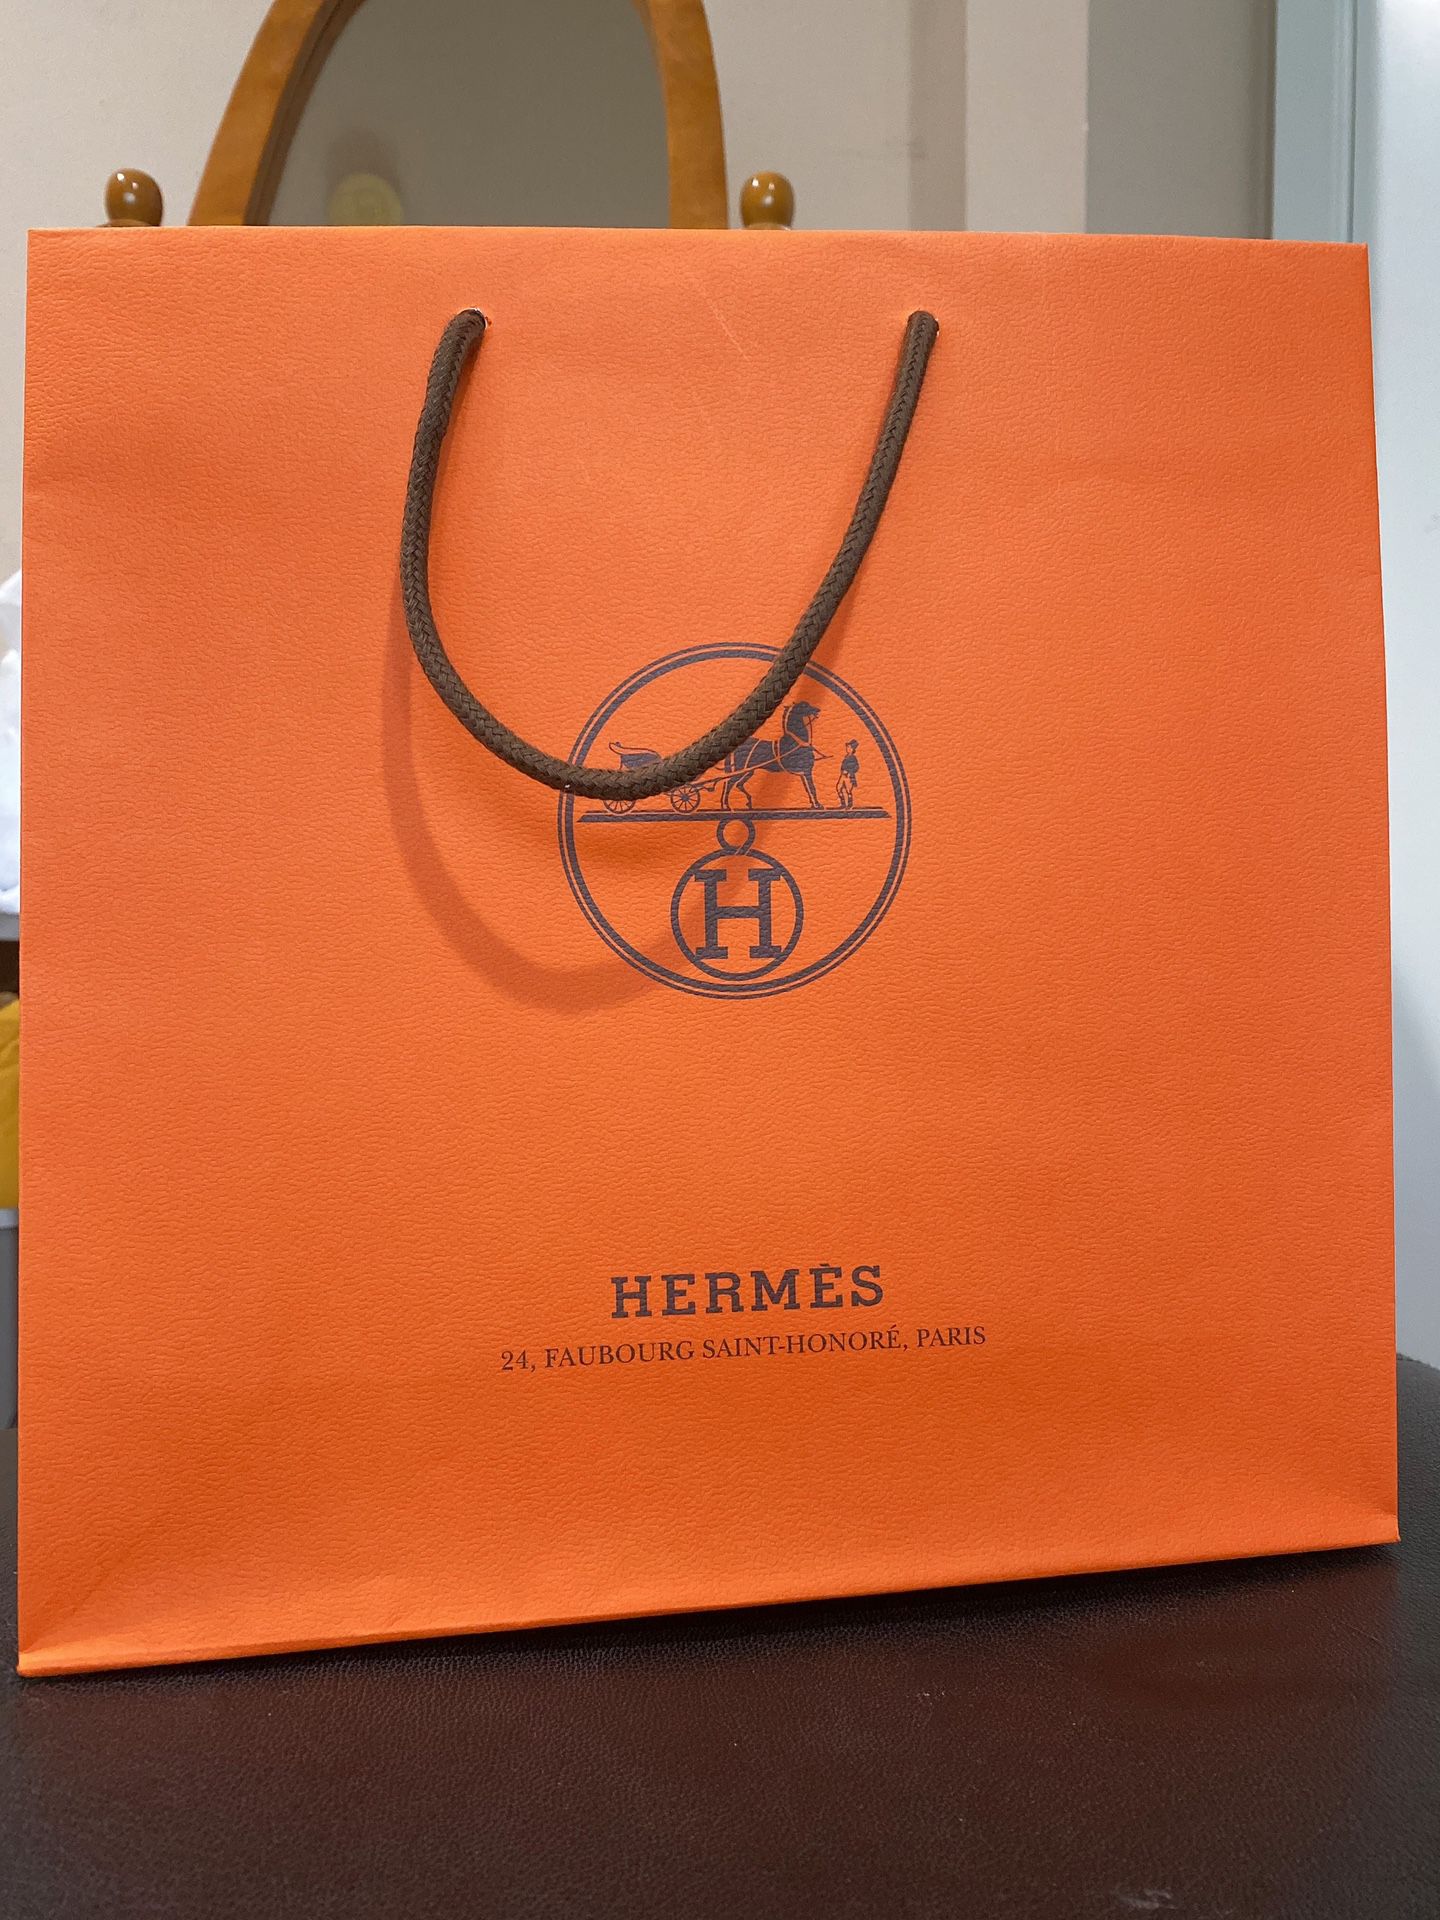 Hermes paper bag (medium size)